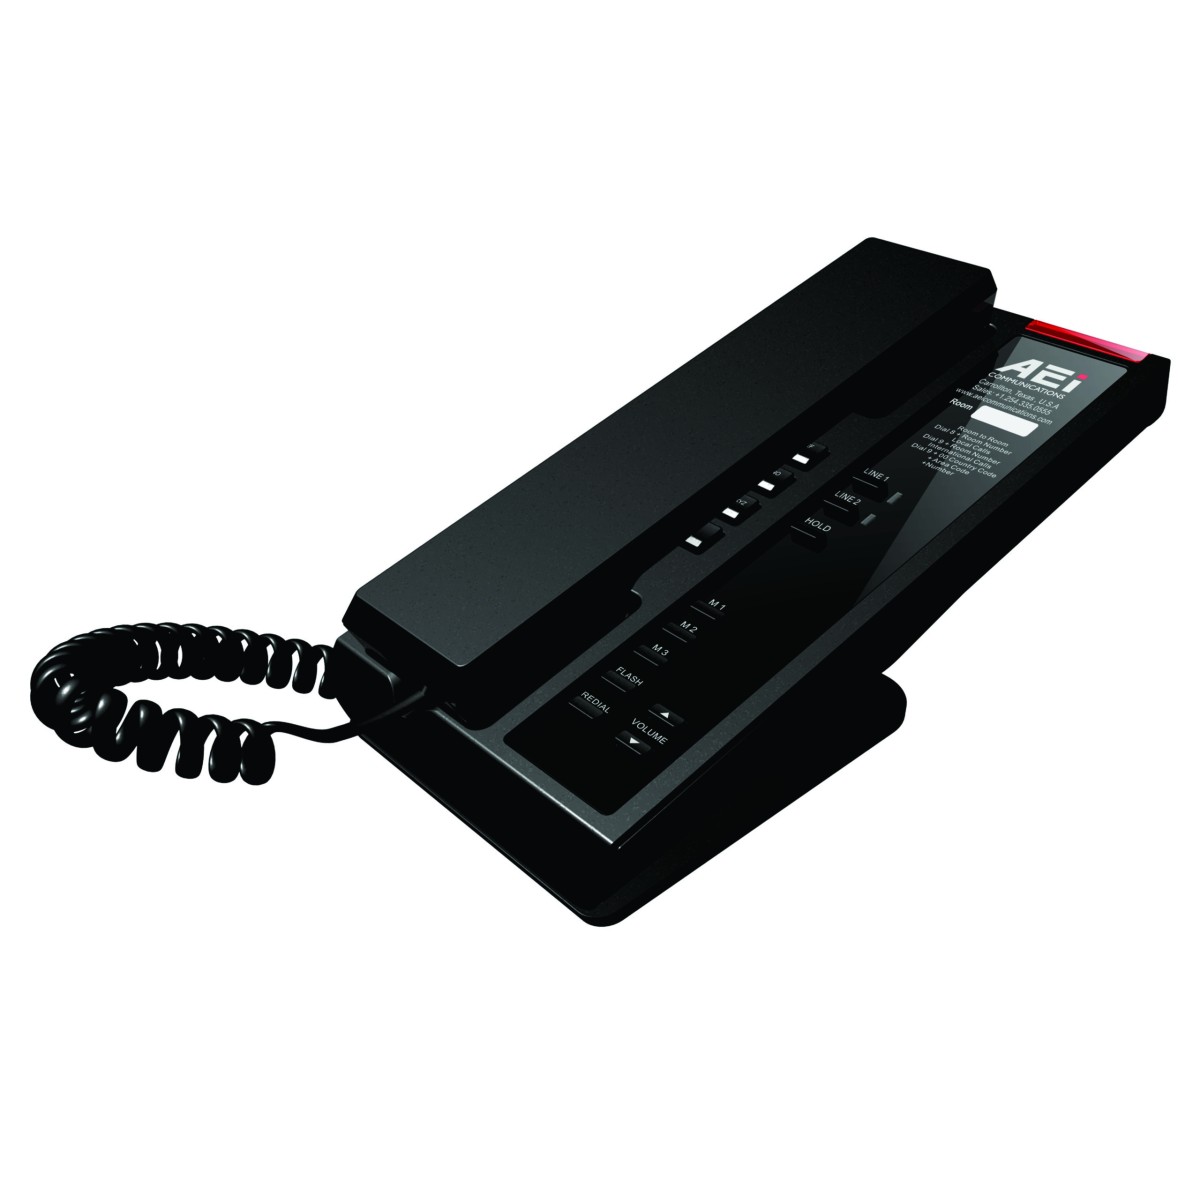 AEI ALN-5203 Slim Dual-Line Analog Corded Telephone